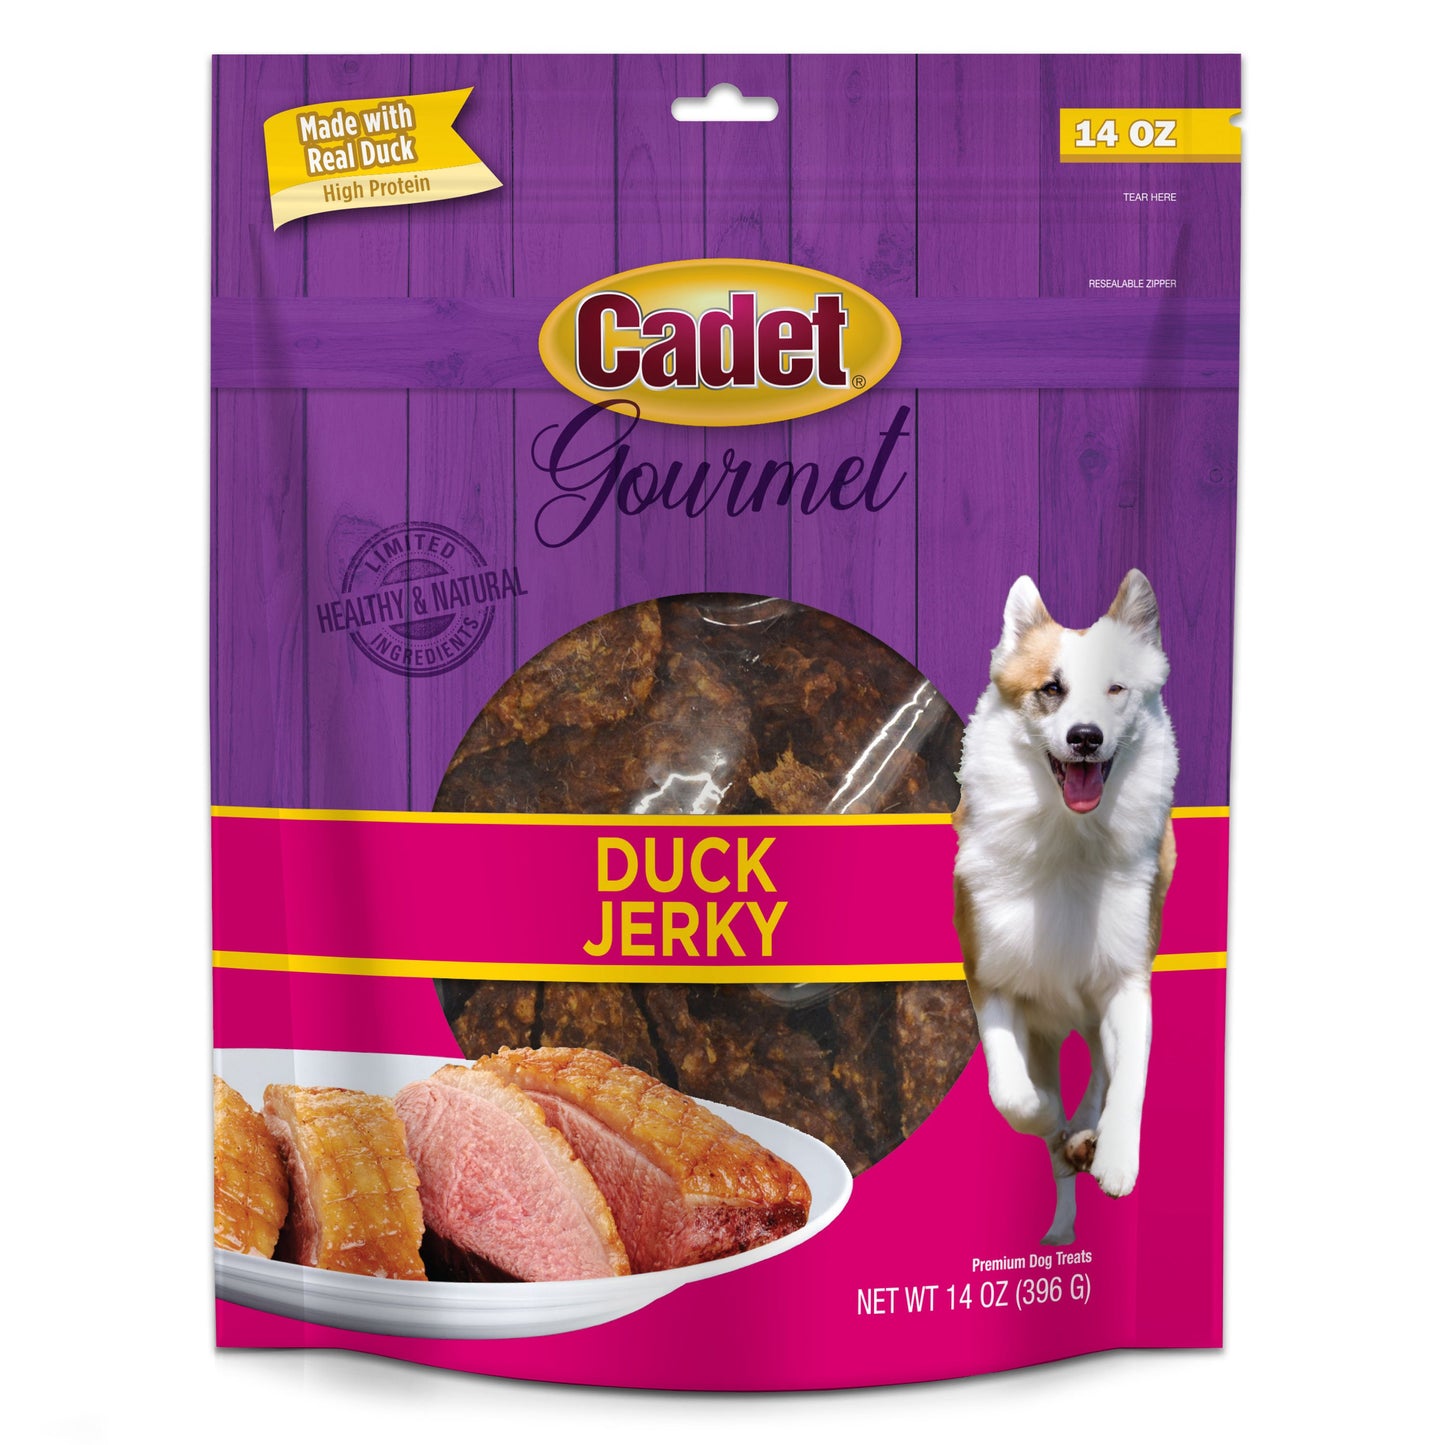 Cadet Gourmet Jerky Duck, 14 oz., Cadet